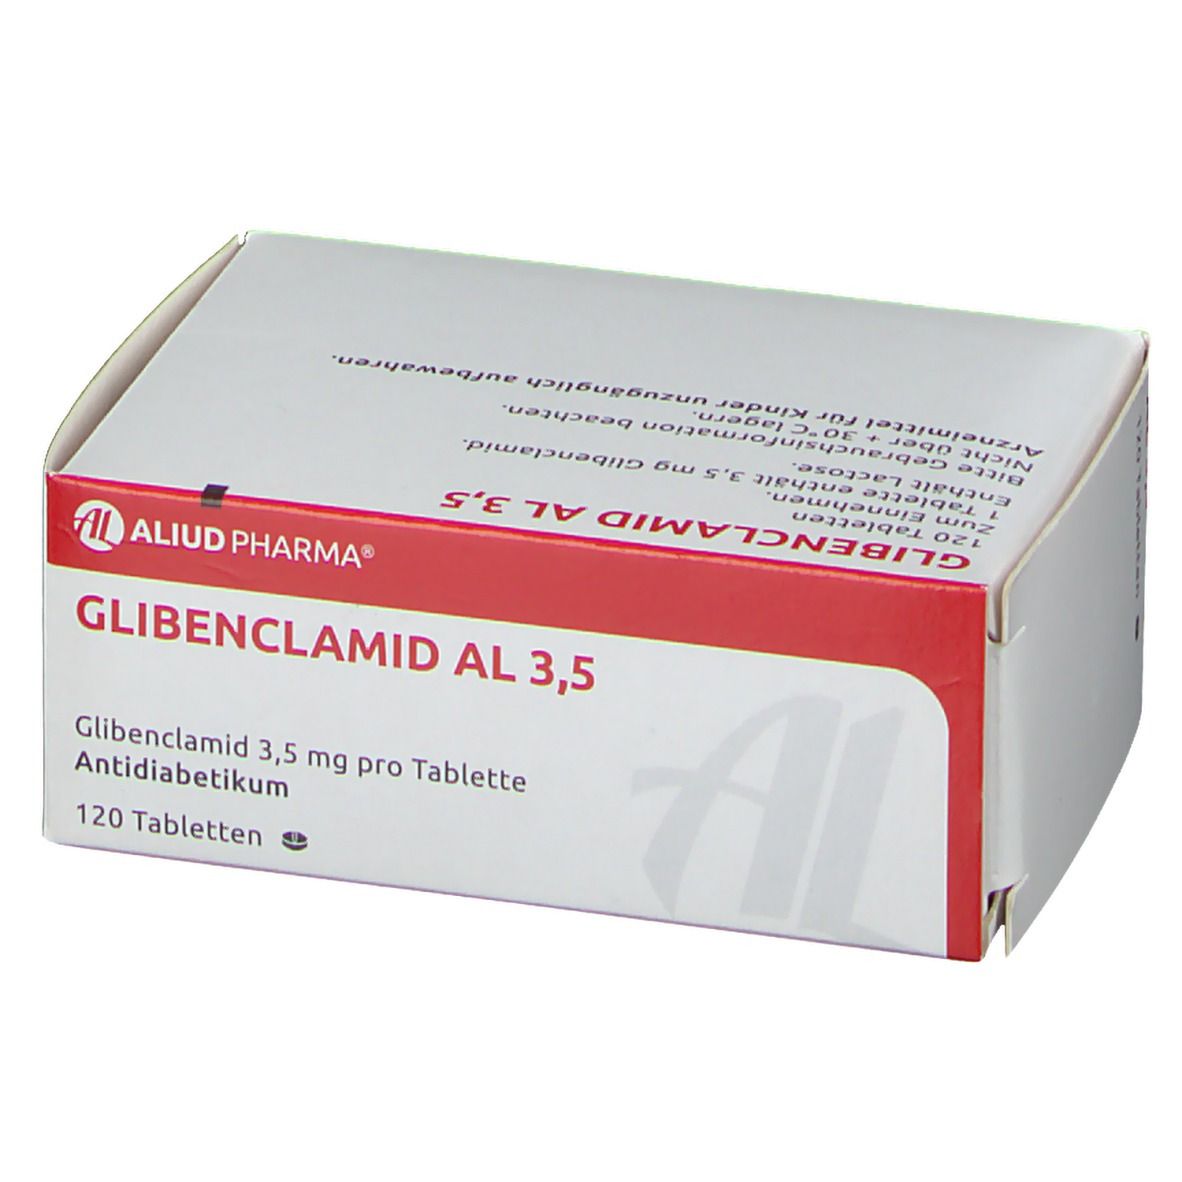 Glibenclamid AL 3,5